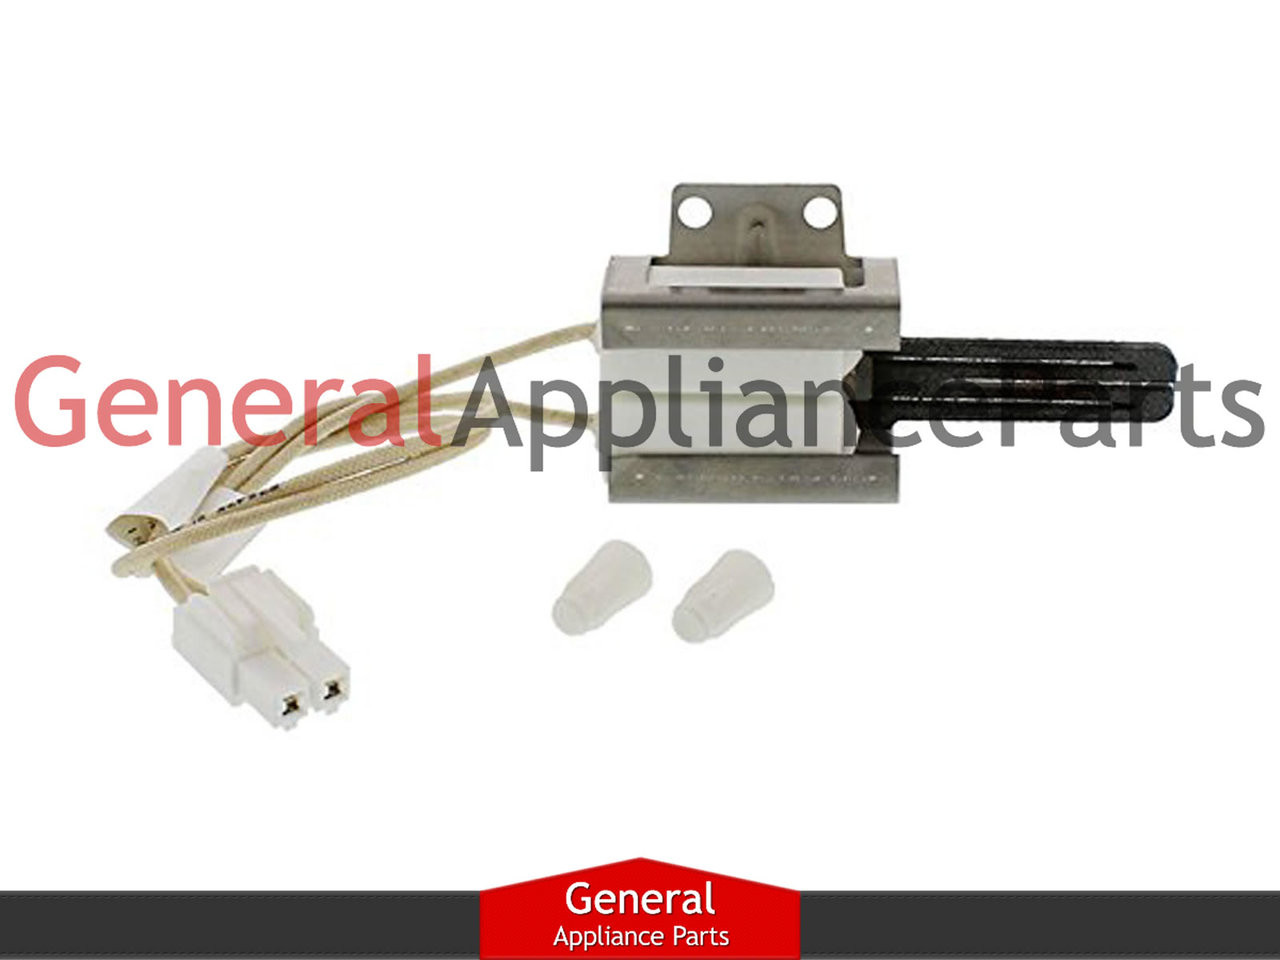 LG Gas Range Oven Stove Cooktop Flat Ignitor Igniter EBZ37171602 